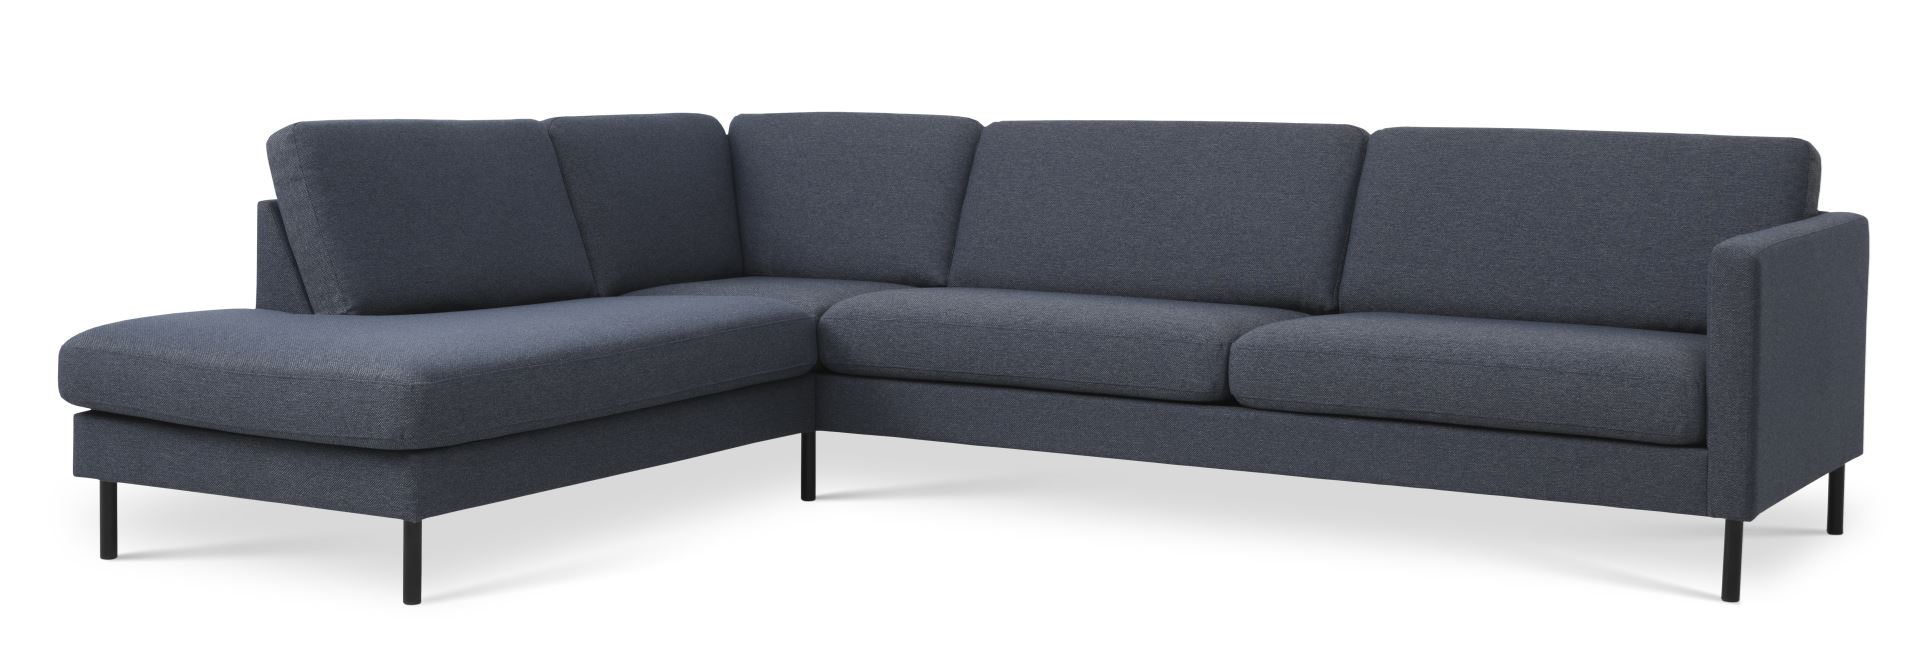 Ask sæt 60 stor OE sofa, m. venstre chaiselong - navy blå polyester stof og sort metal